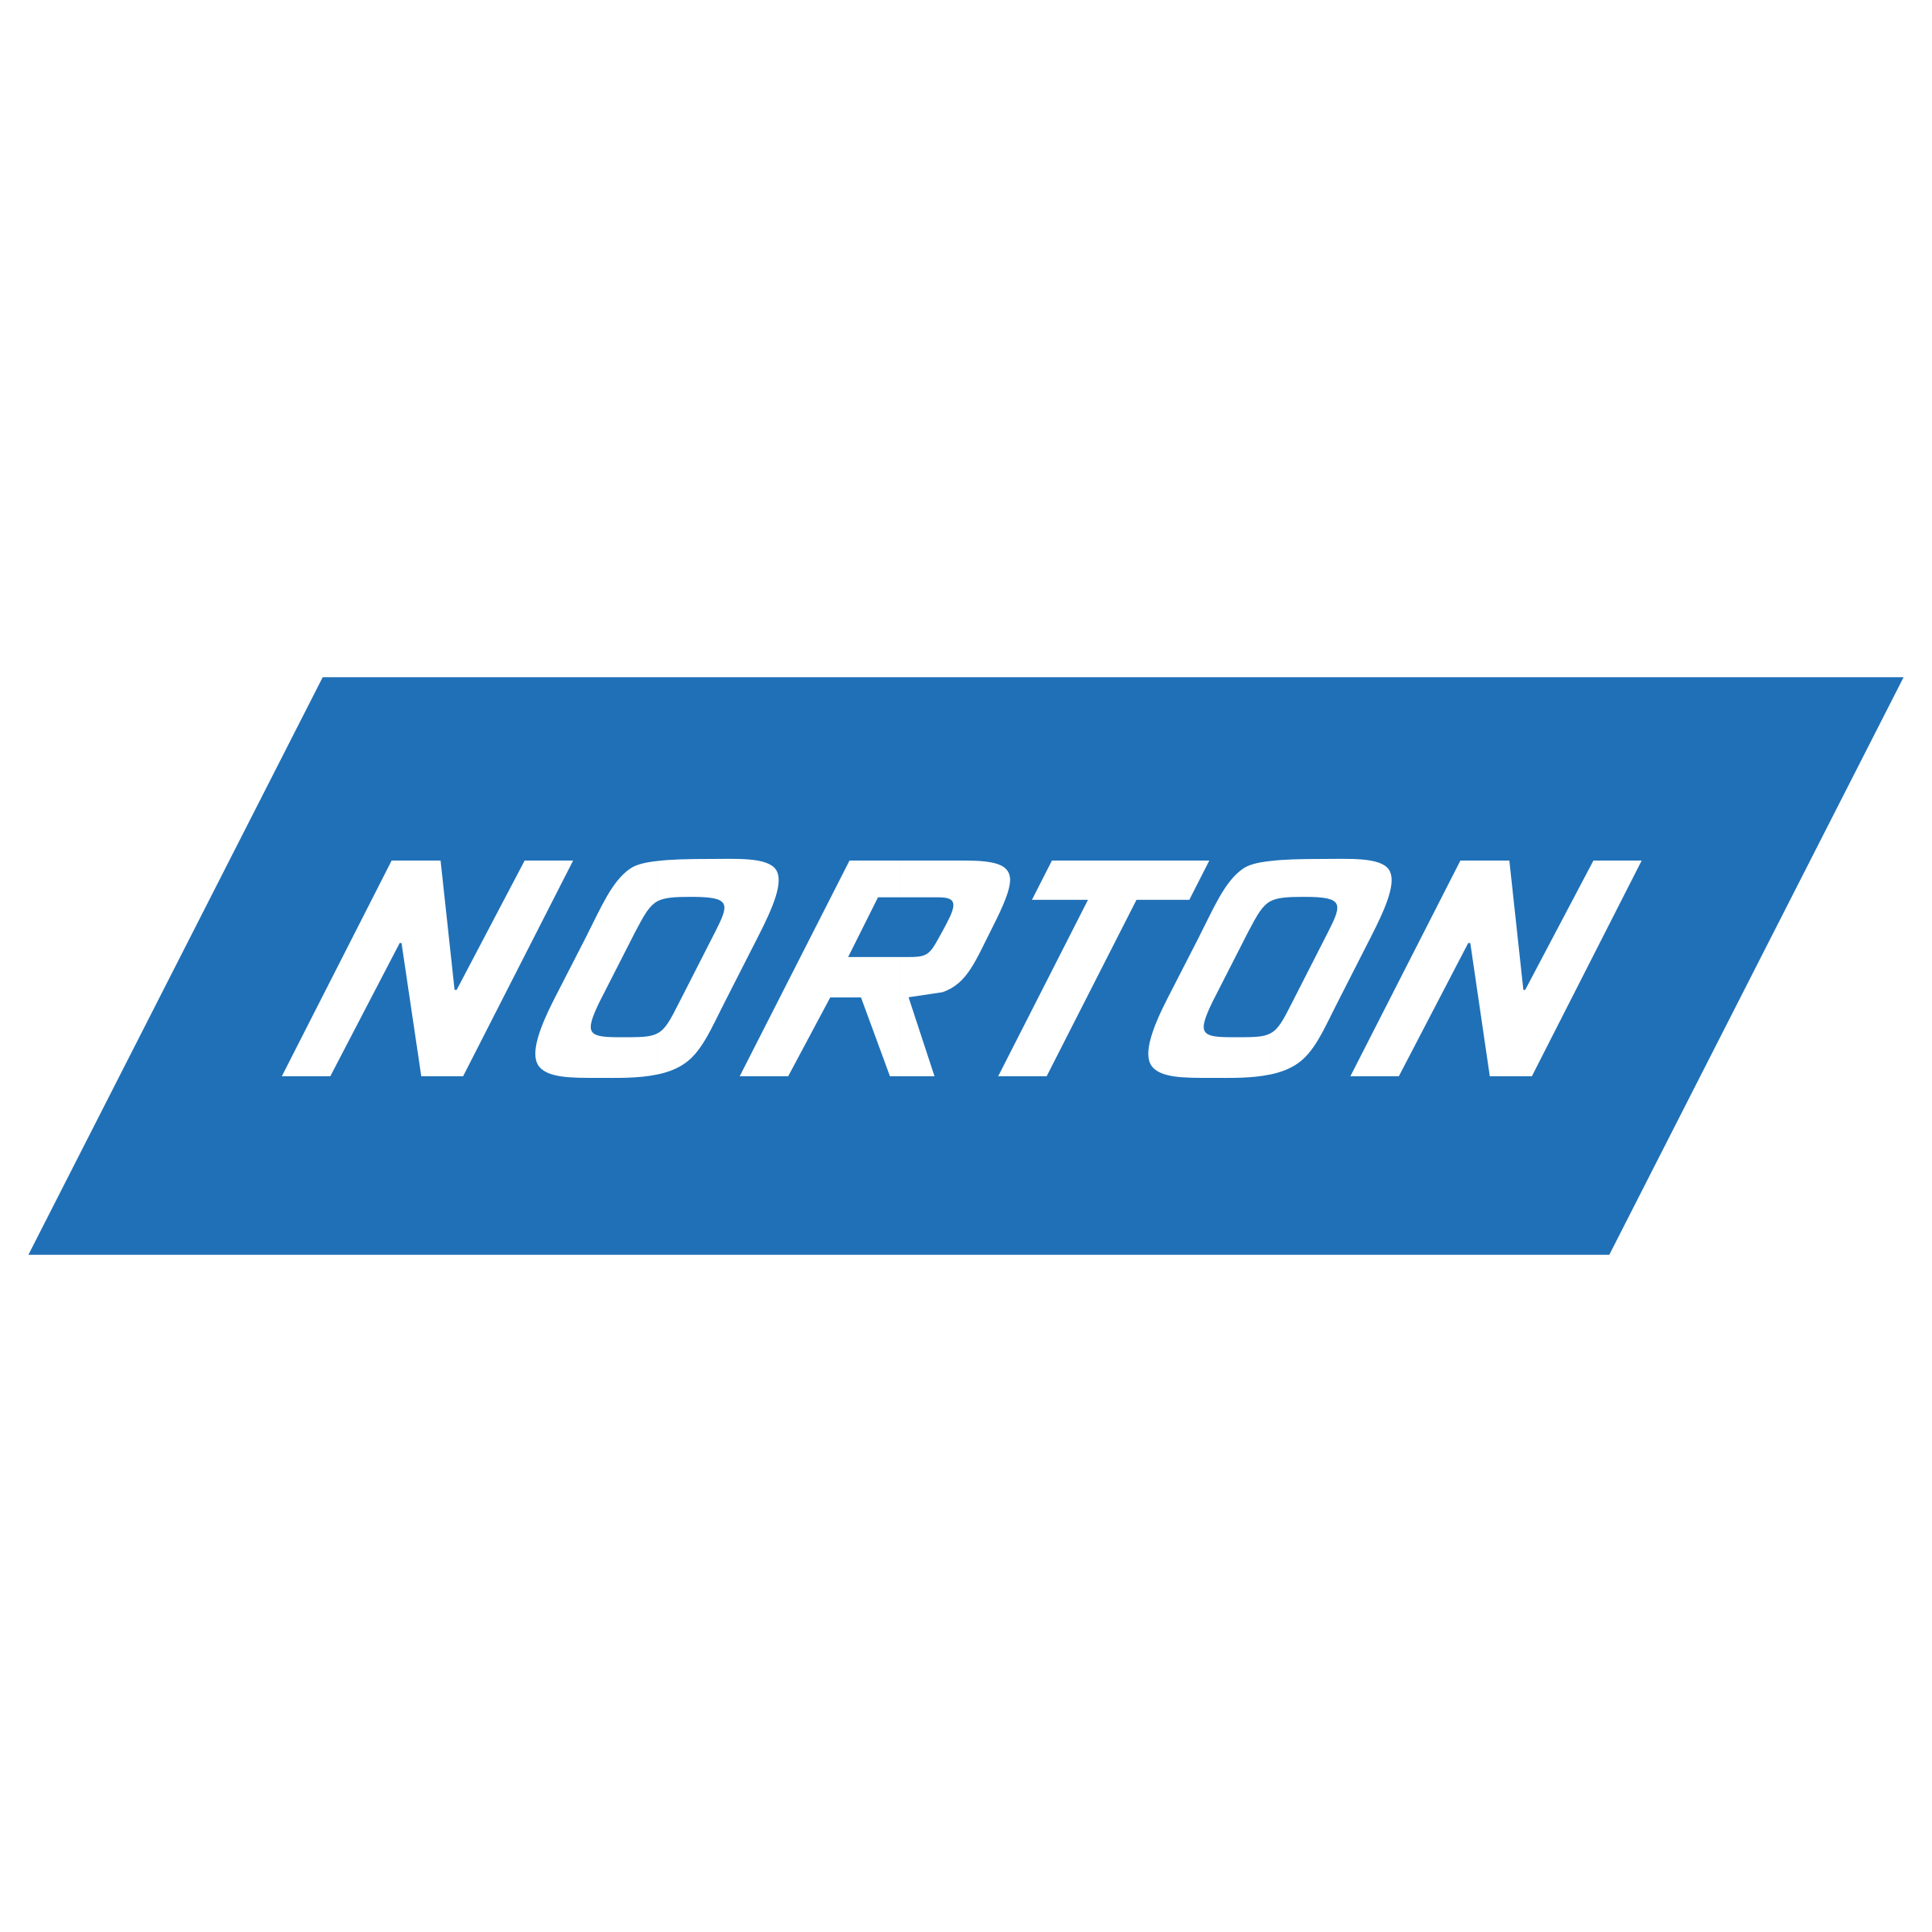 Norton Logo PNG Transparent & SVG Vector.